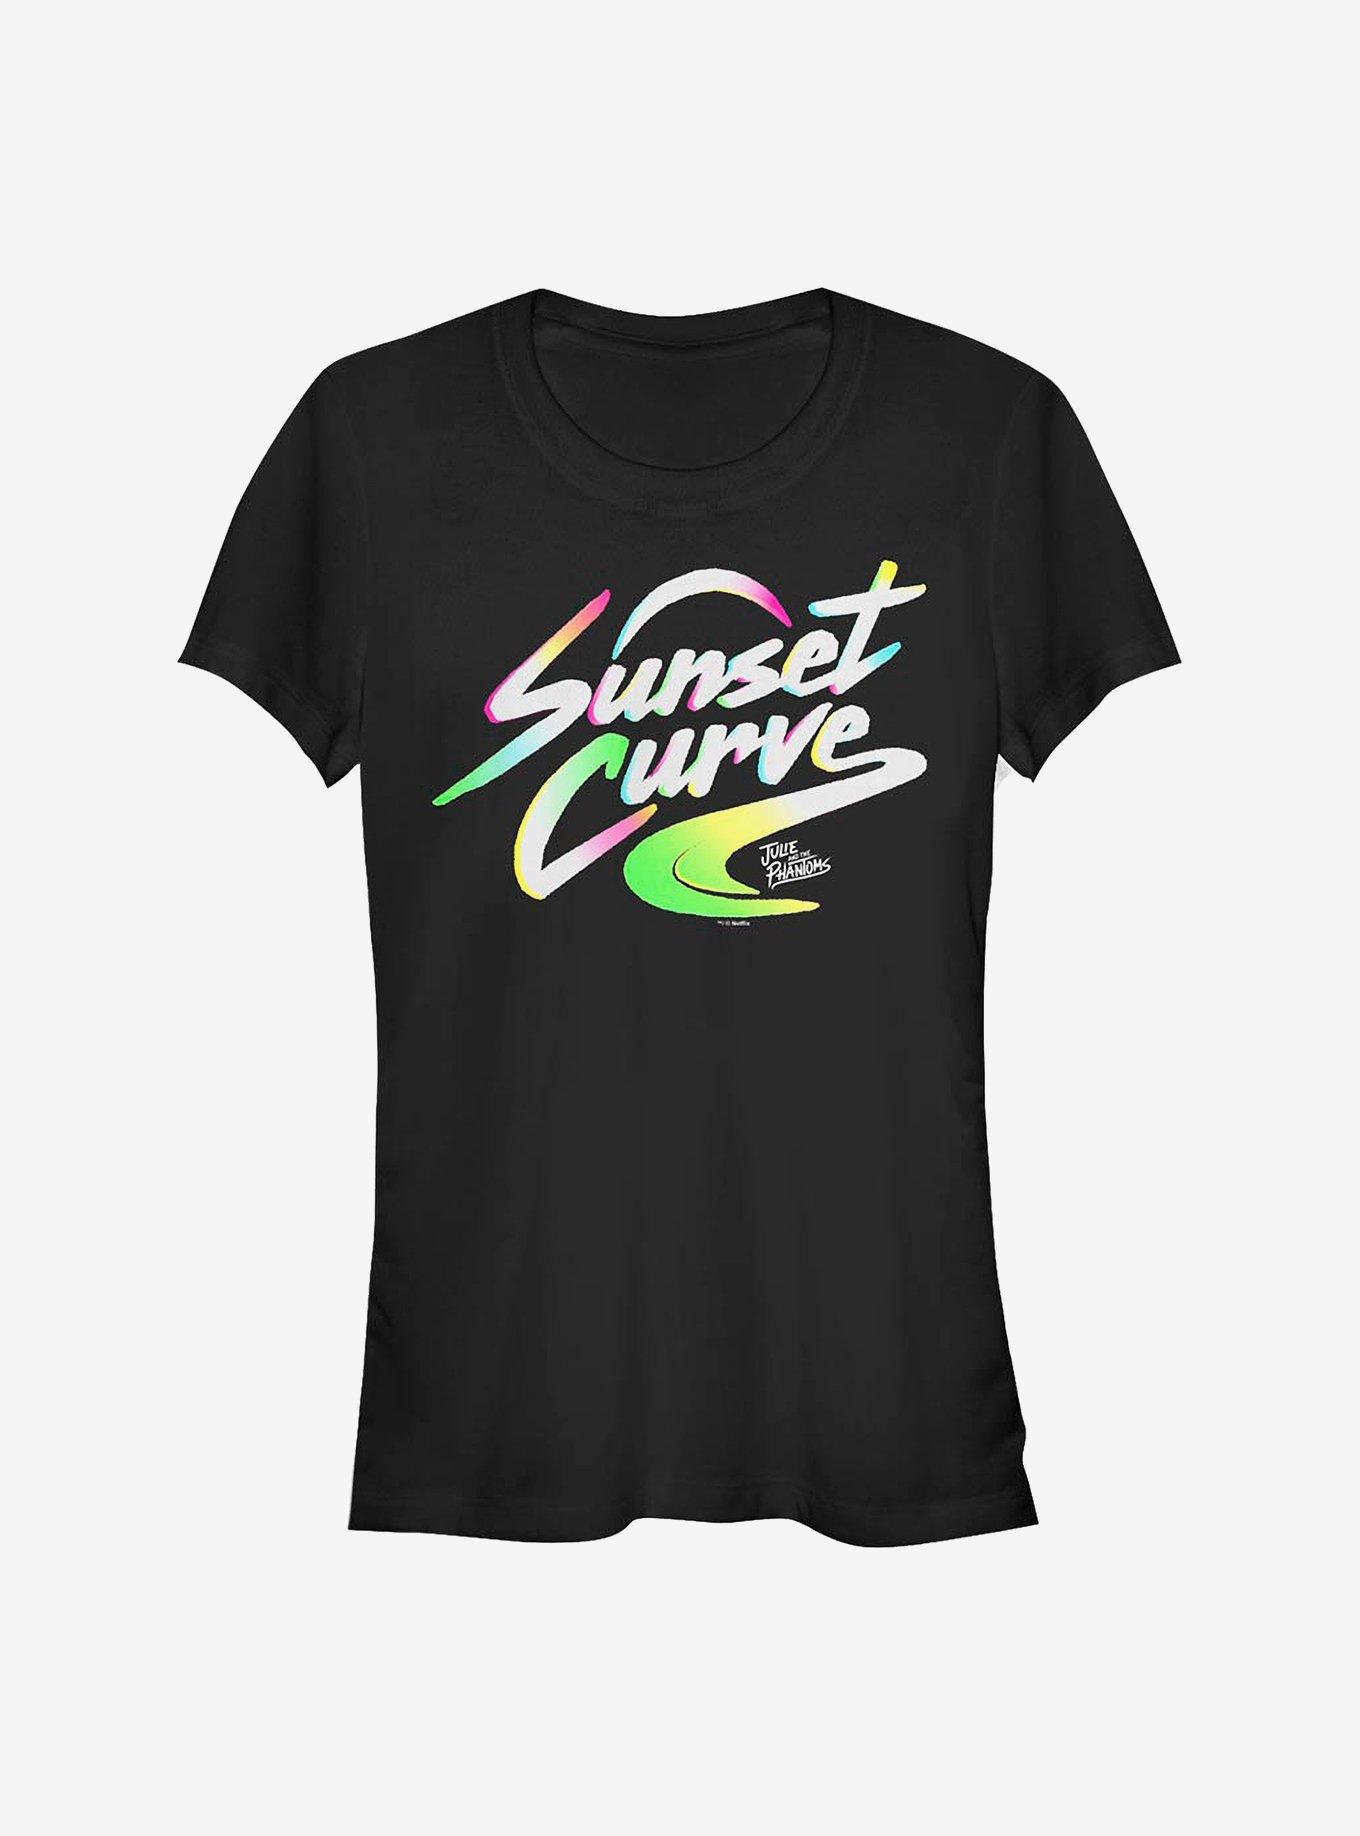 Julie And The Phantoms Sunset Curve Logo Girls T-Shirt, BLACK, hi-res